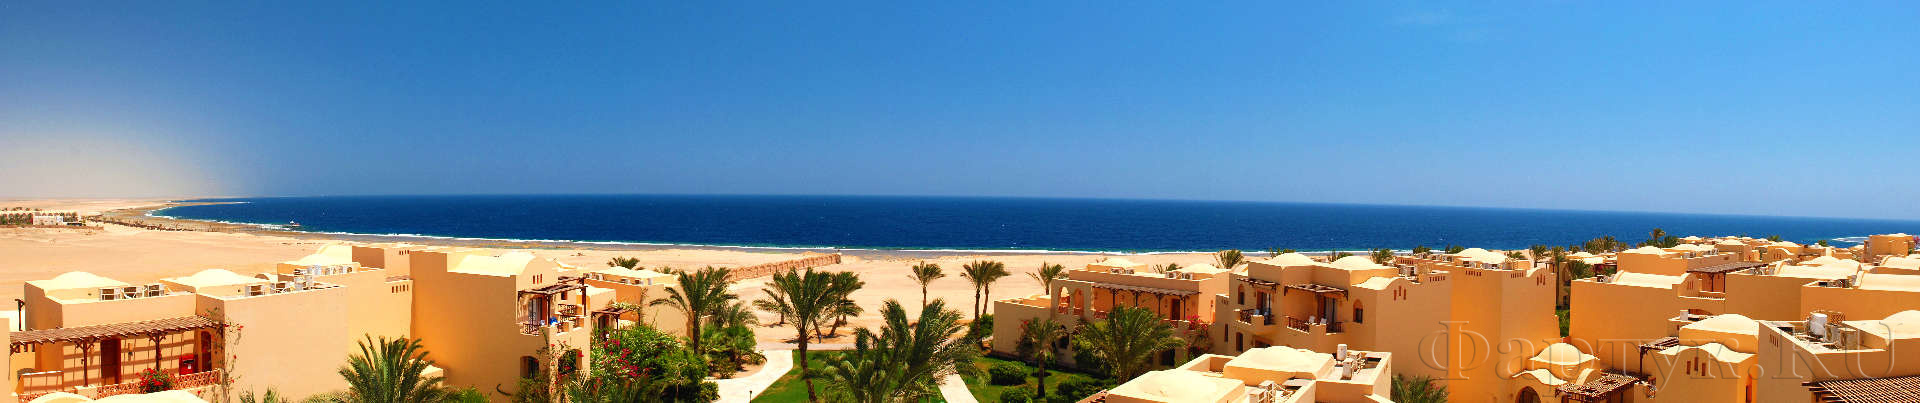 Панорама отеля на берегу моря